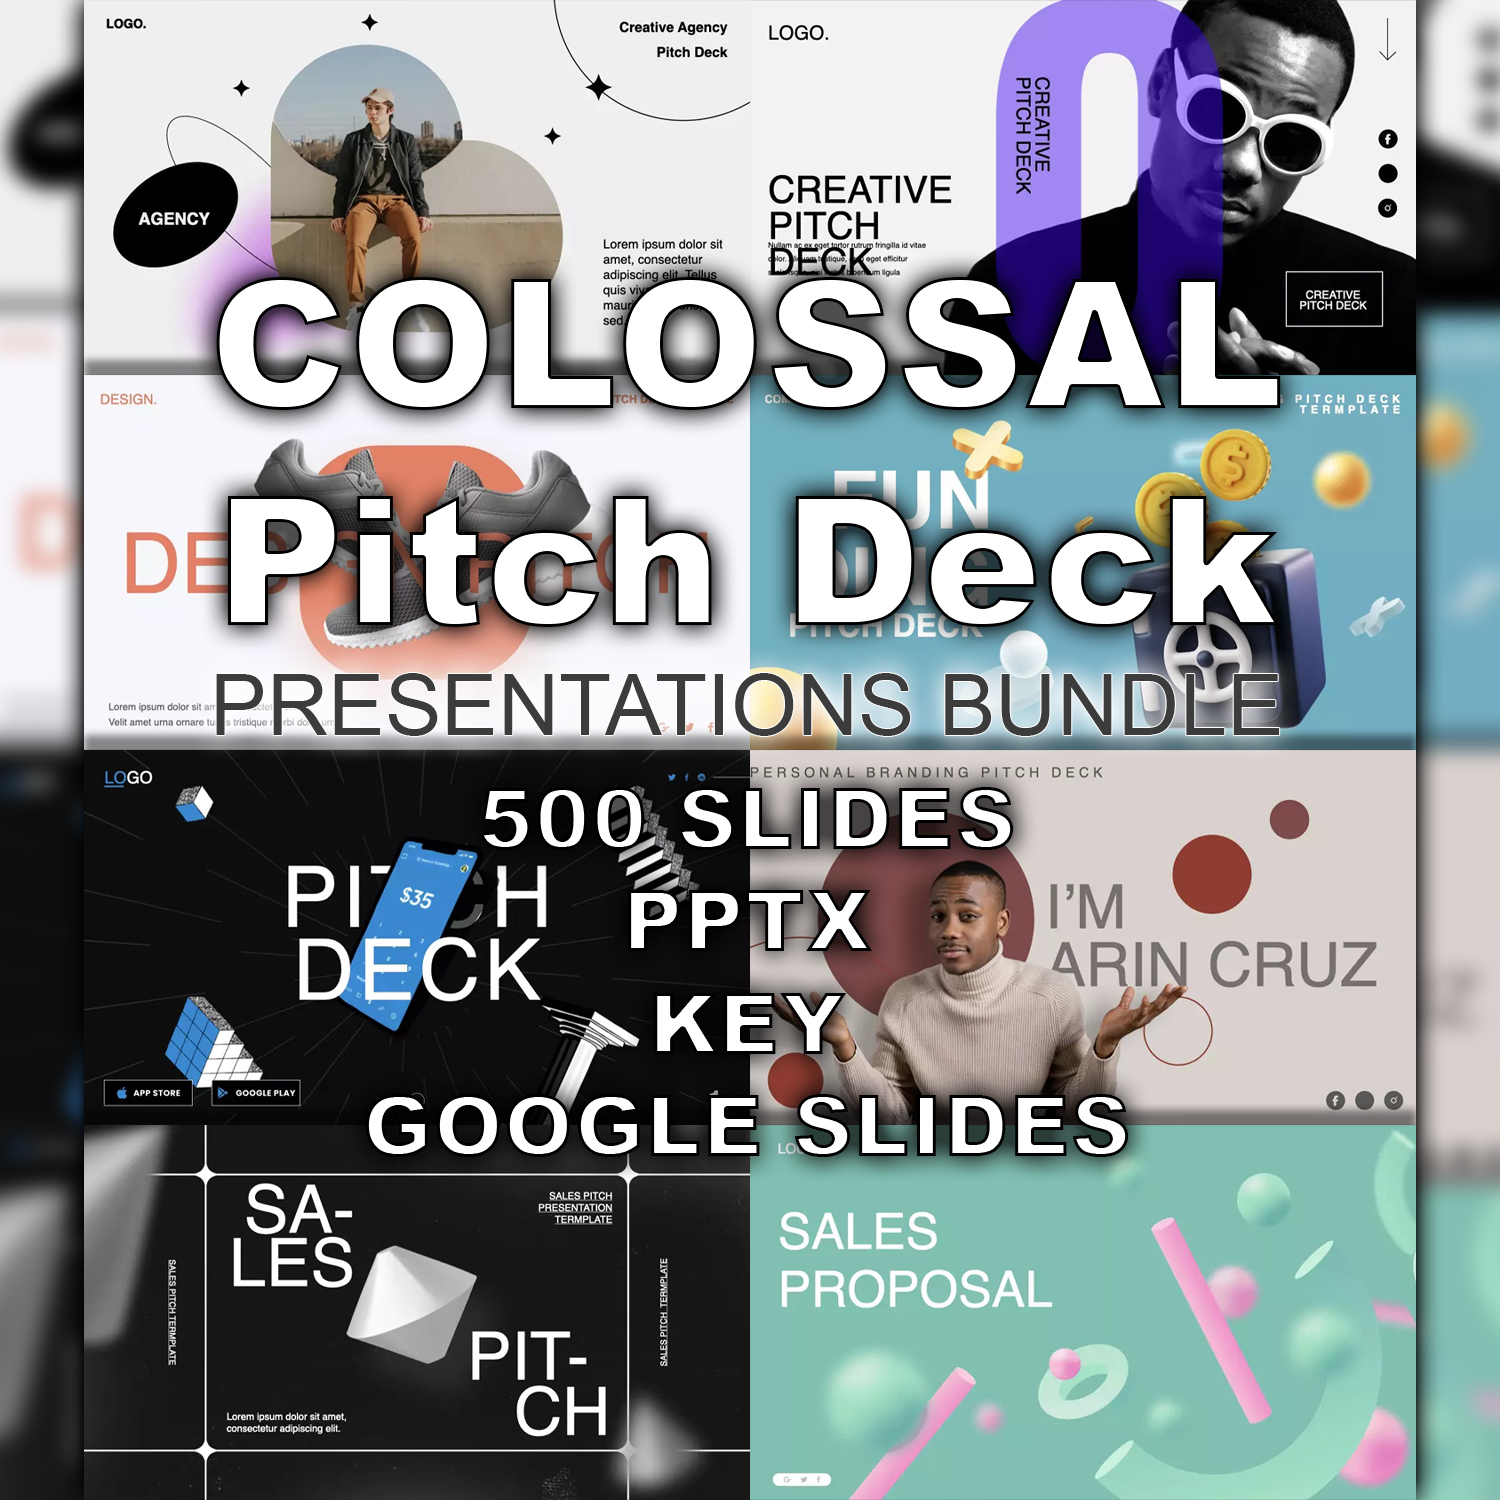 Colossal Pitch Deck Presentations Bundle 500 Slides PPTX Key Google Slides 1500 1500 1.